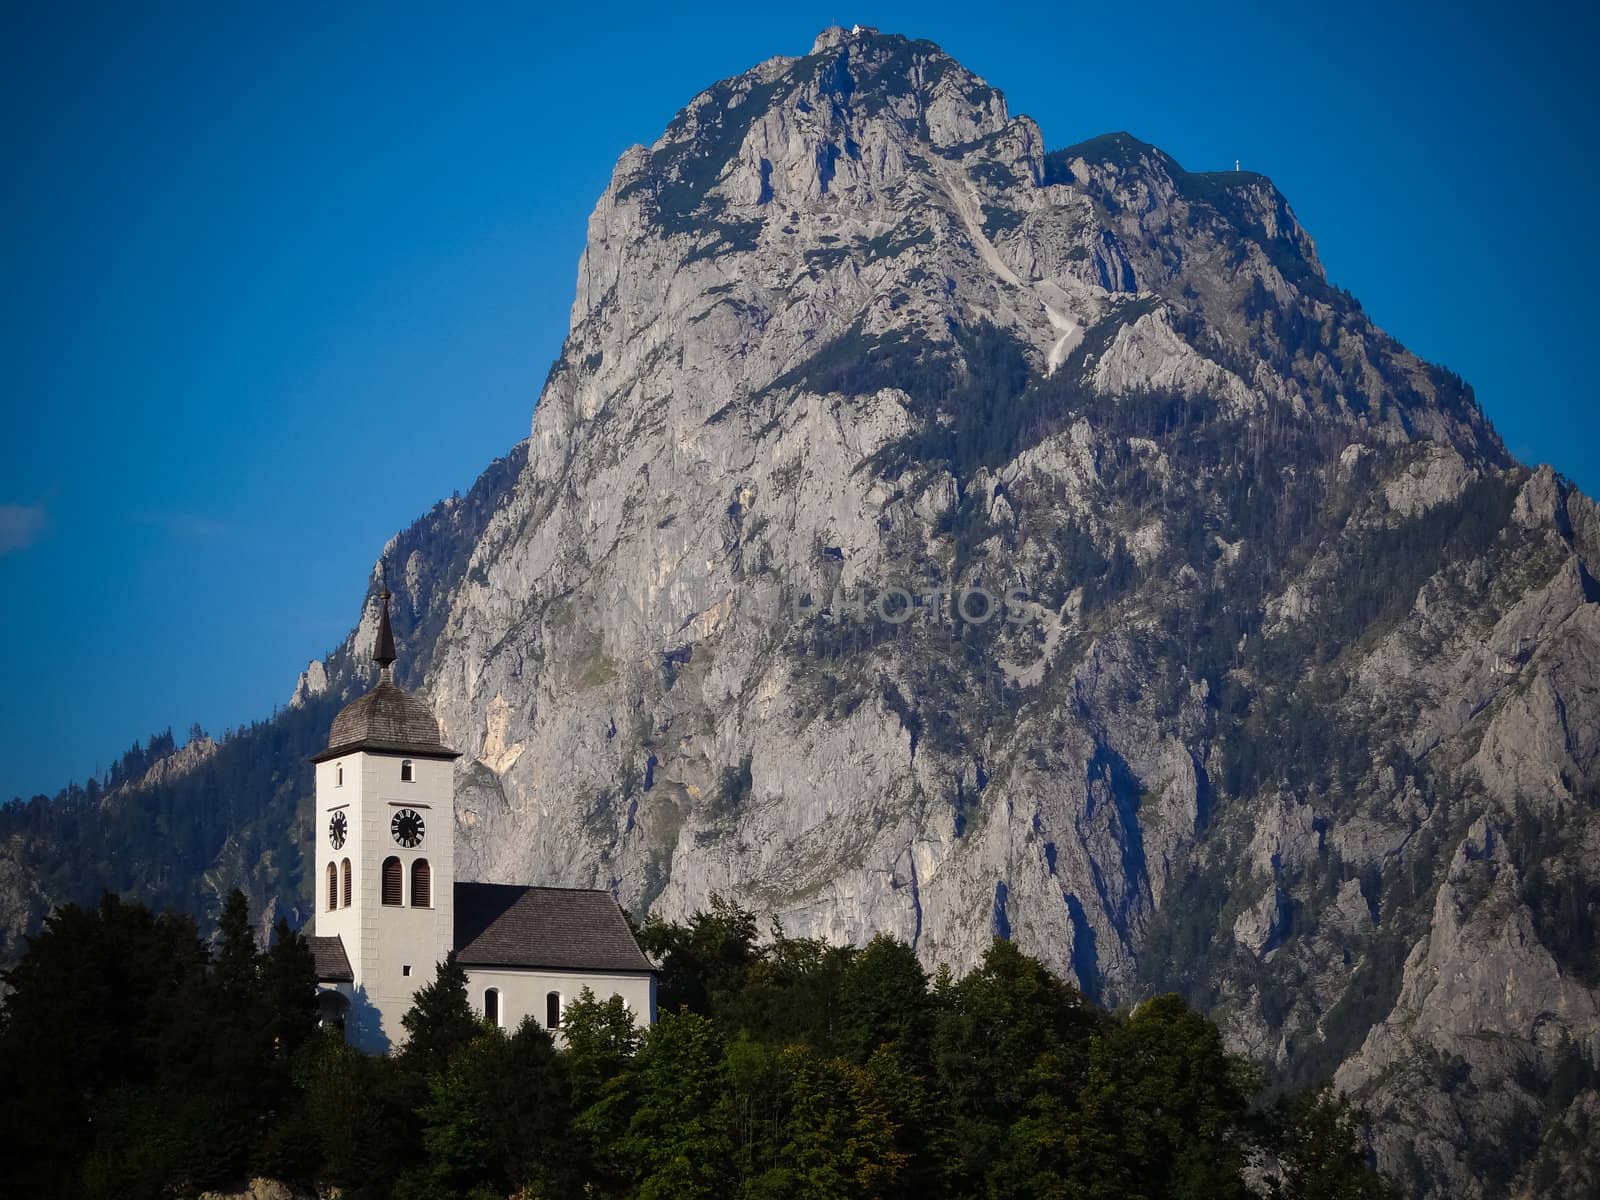 Little chapel next to mountain Traunstein, Austria